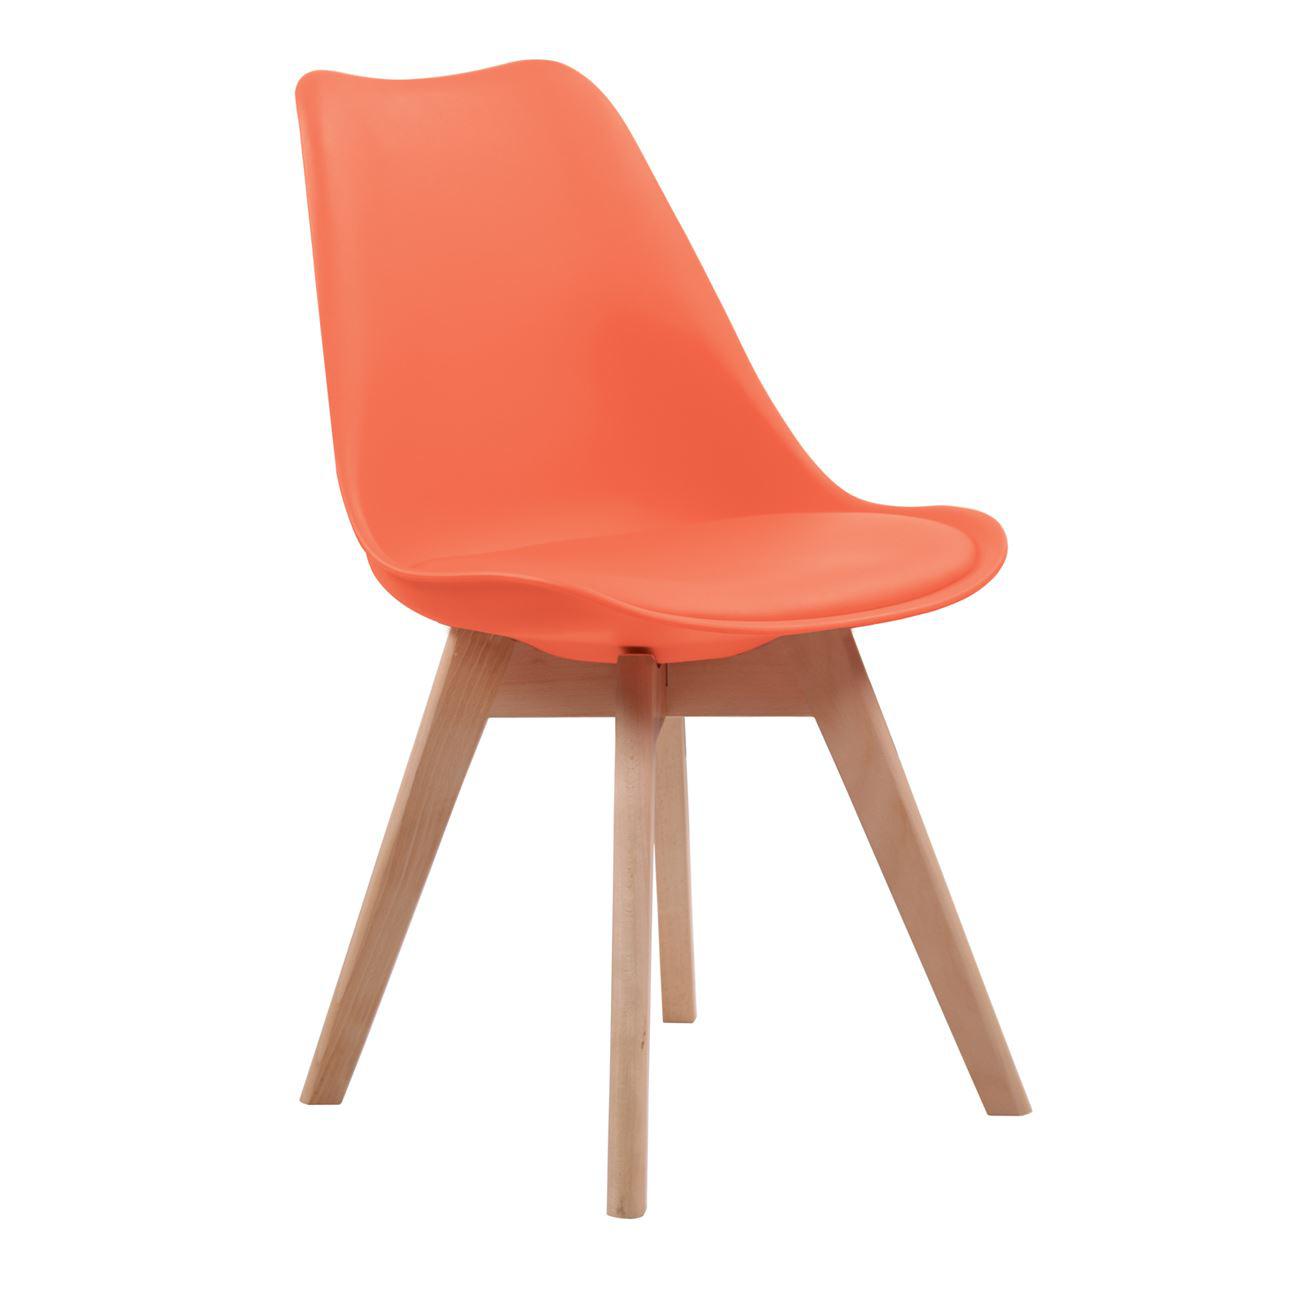 MARTIN Καρέκλα Ξύλο / PP Πορτοκαλί - Μονταρισμένη Ταπετσαρία